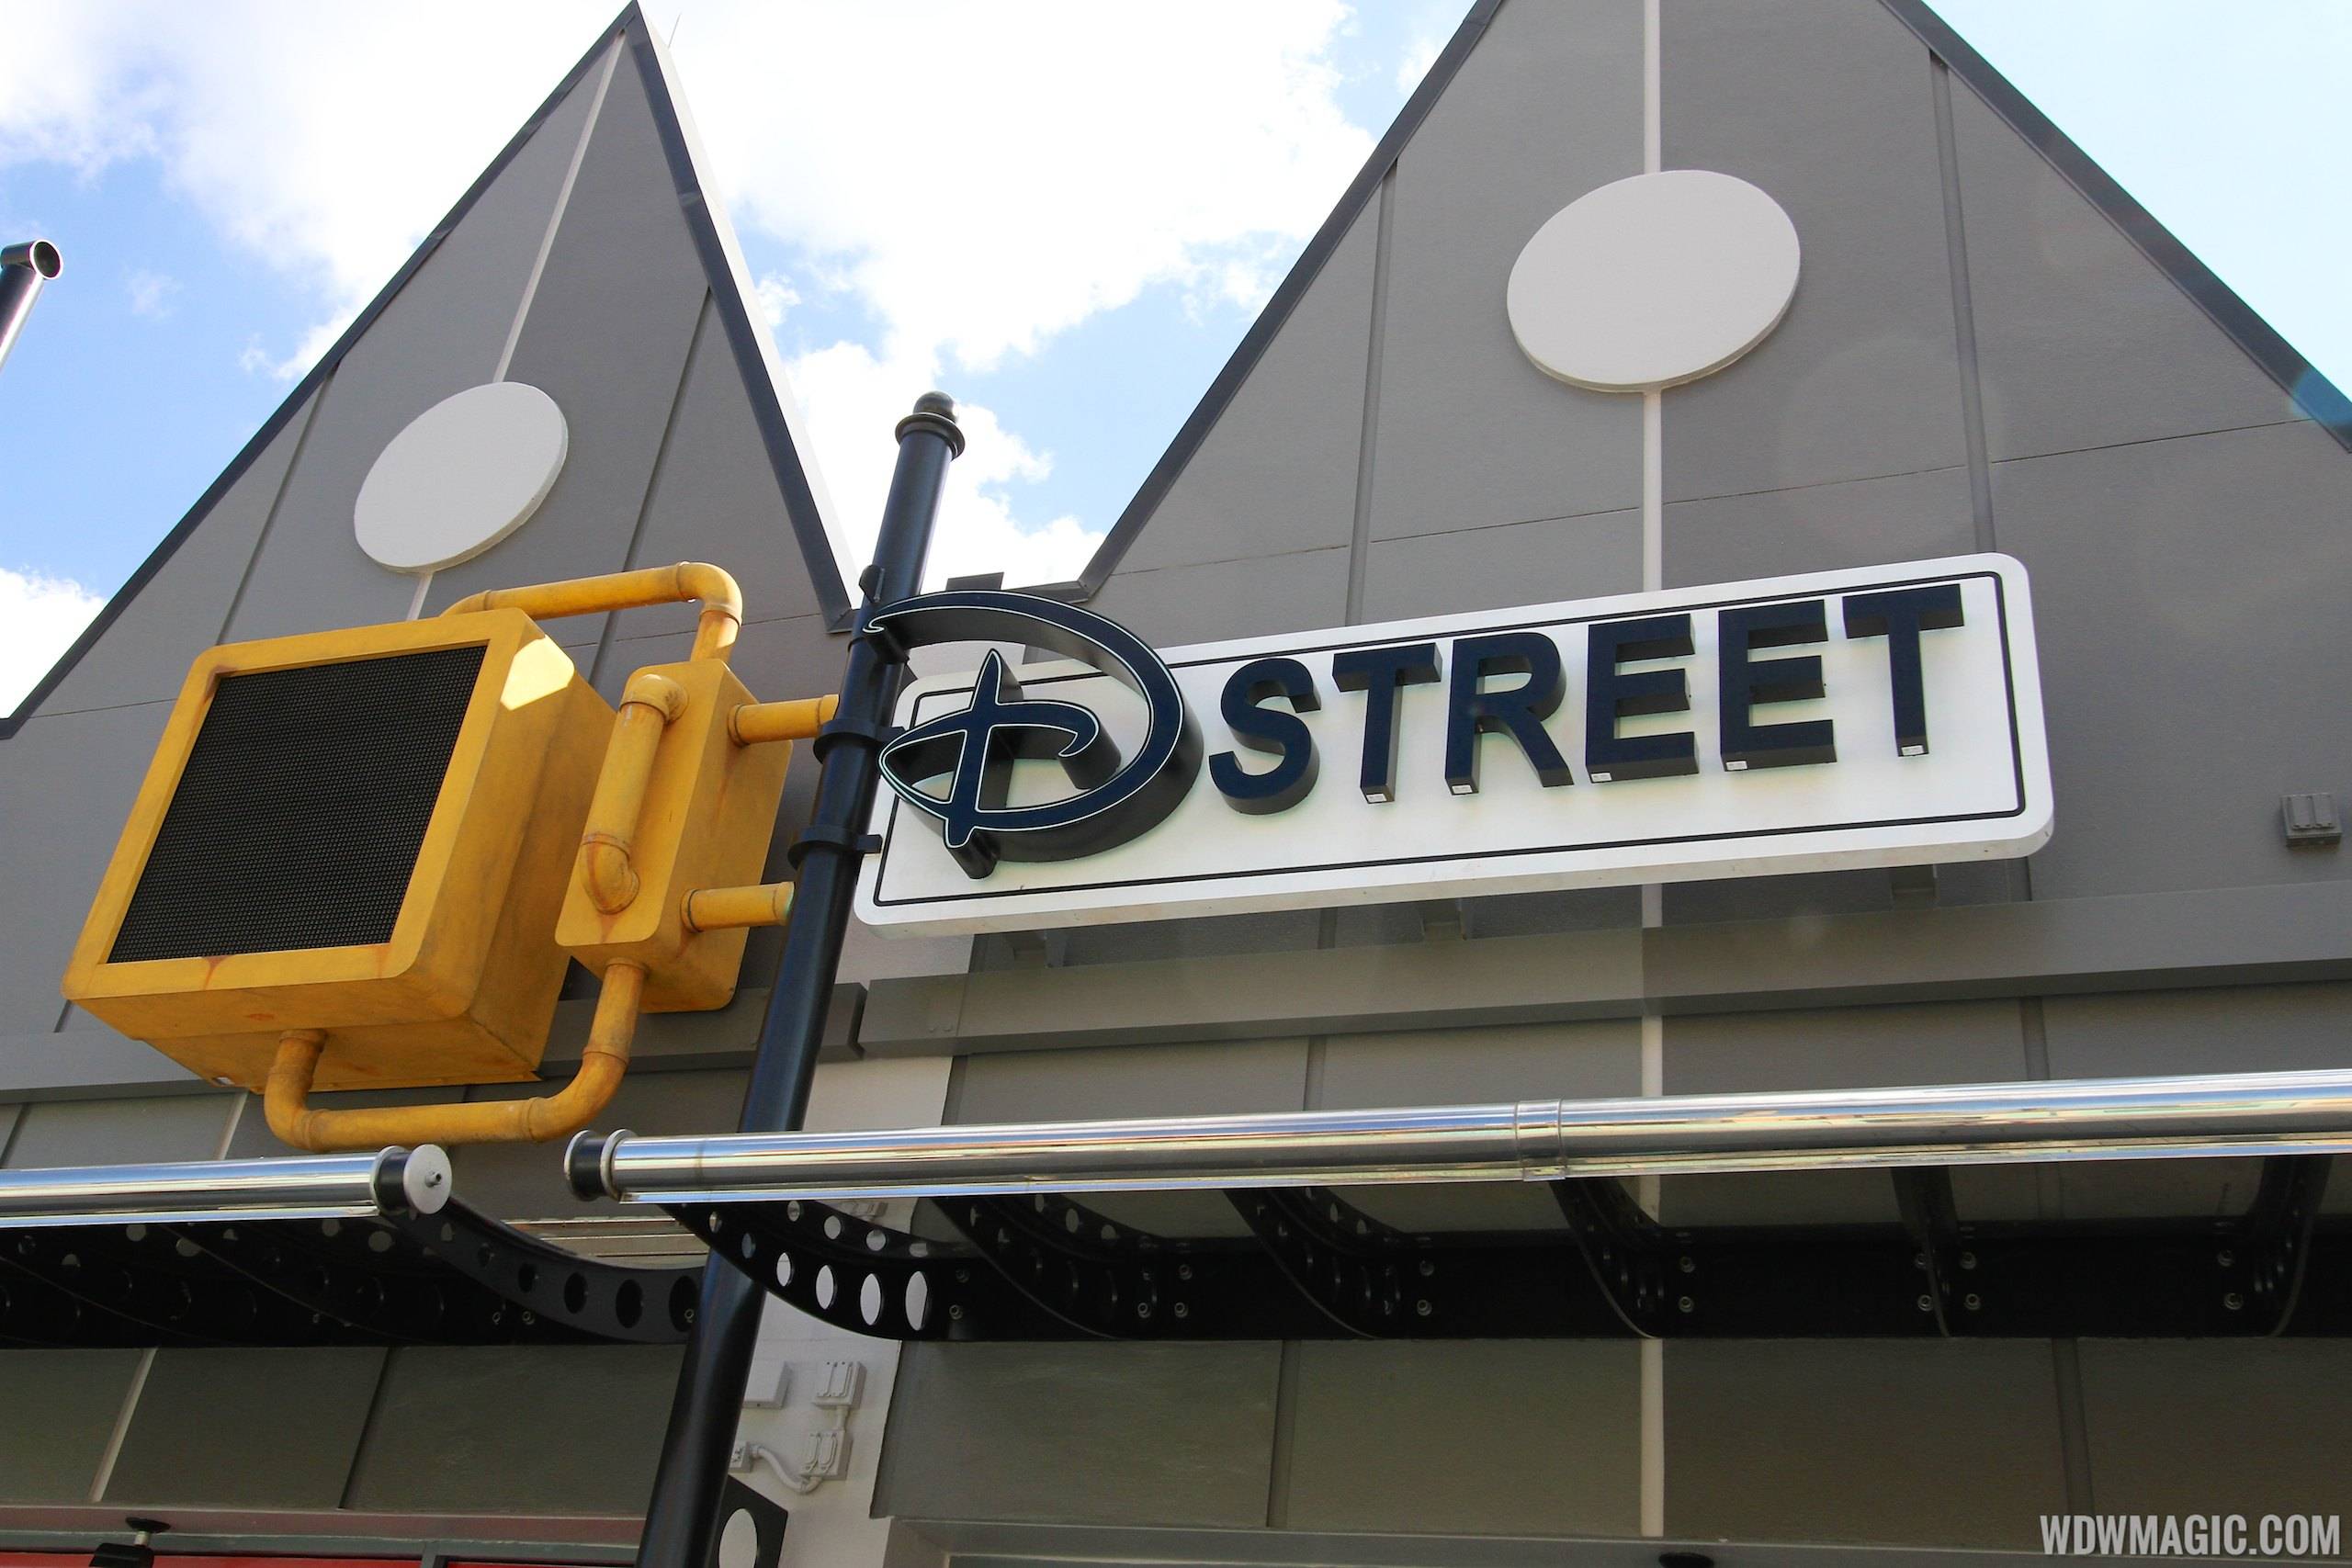 West Side D-Street new paint scheme for Disney Springs